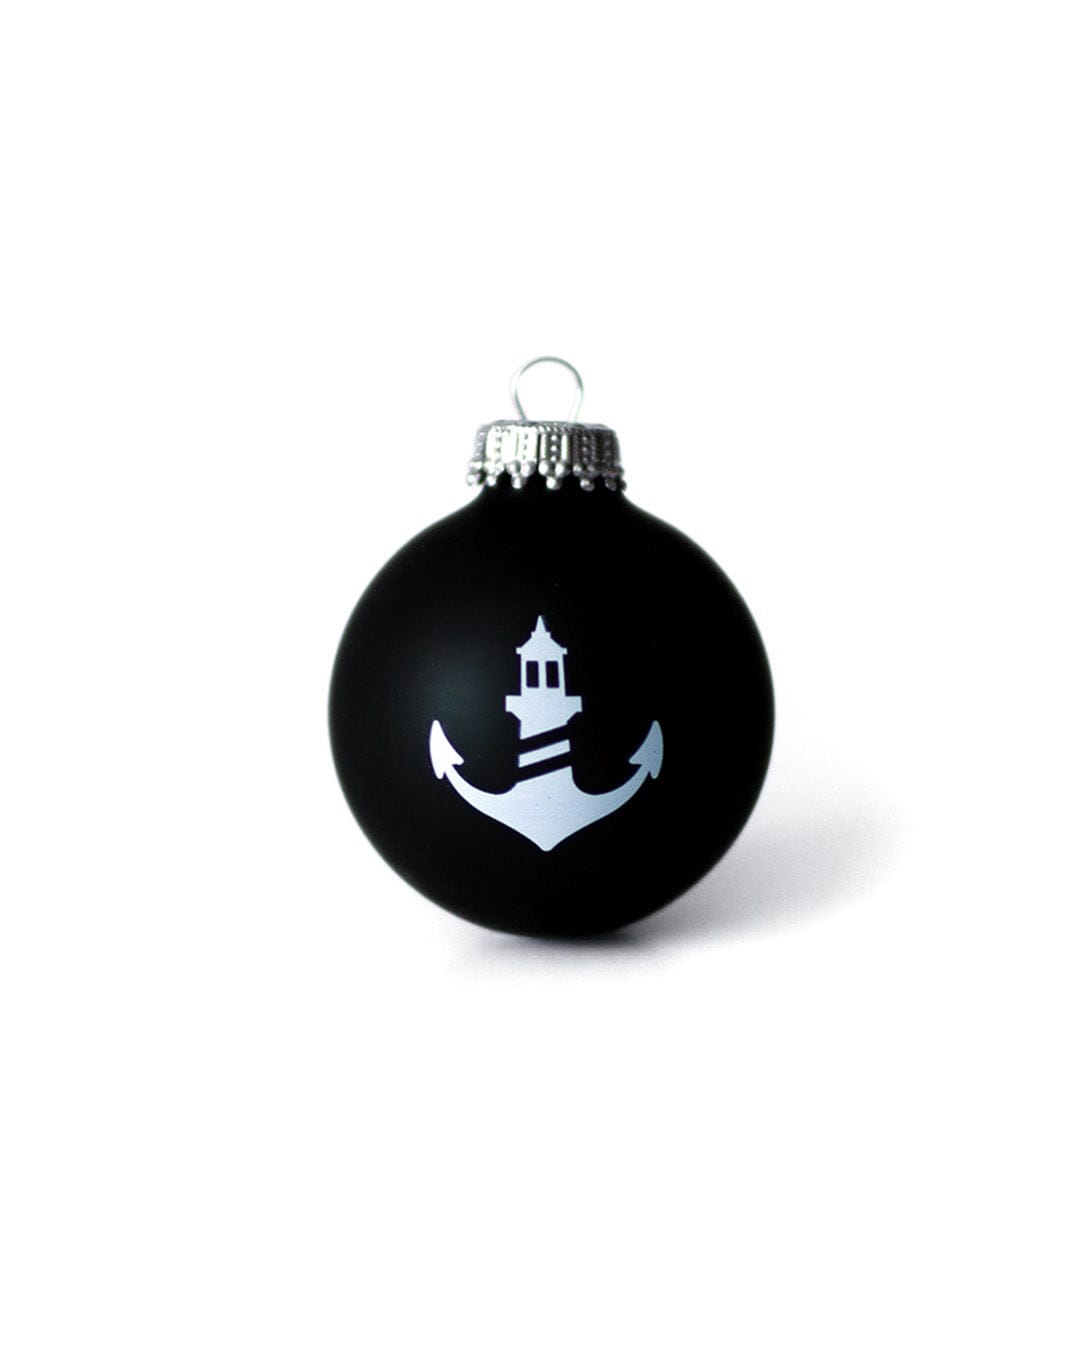 Fred Stroncton Christmas Ball (Black)